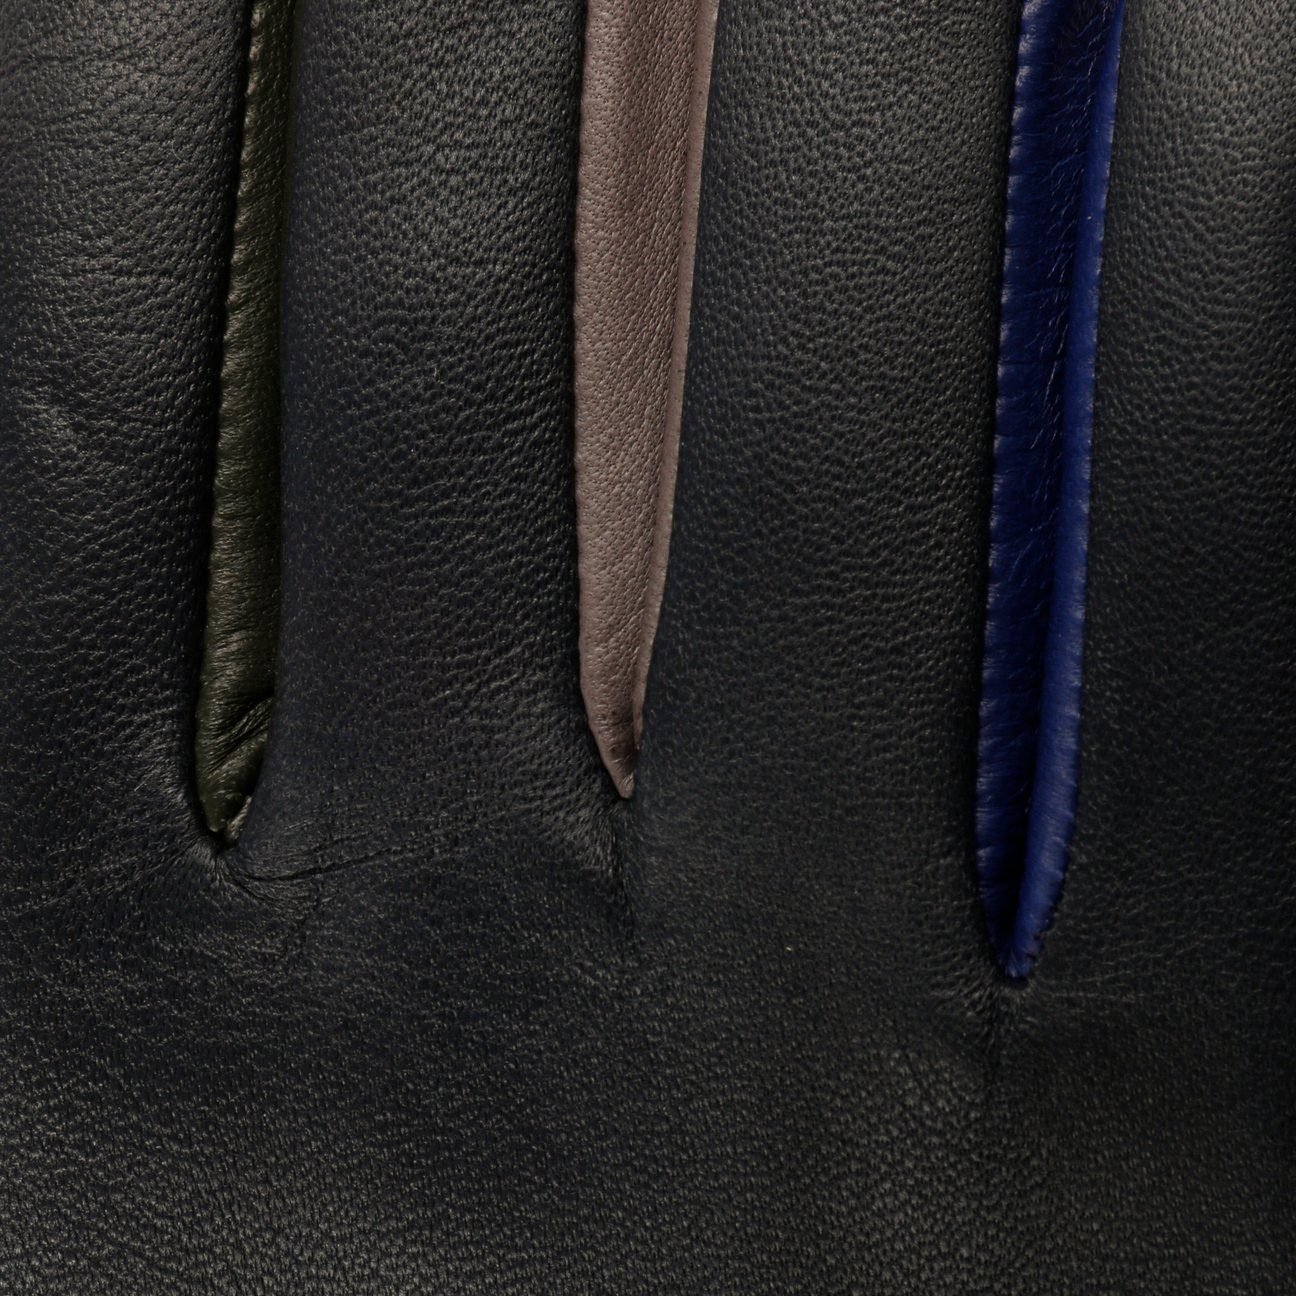 Nappalederhandschuhe Roeckl dunkelblau mit Lederhandschuhe Futter